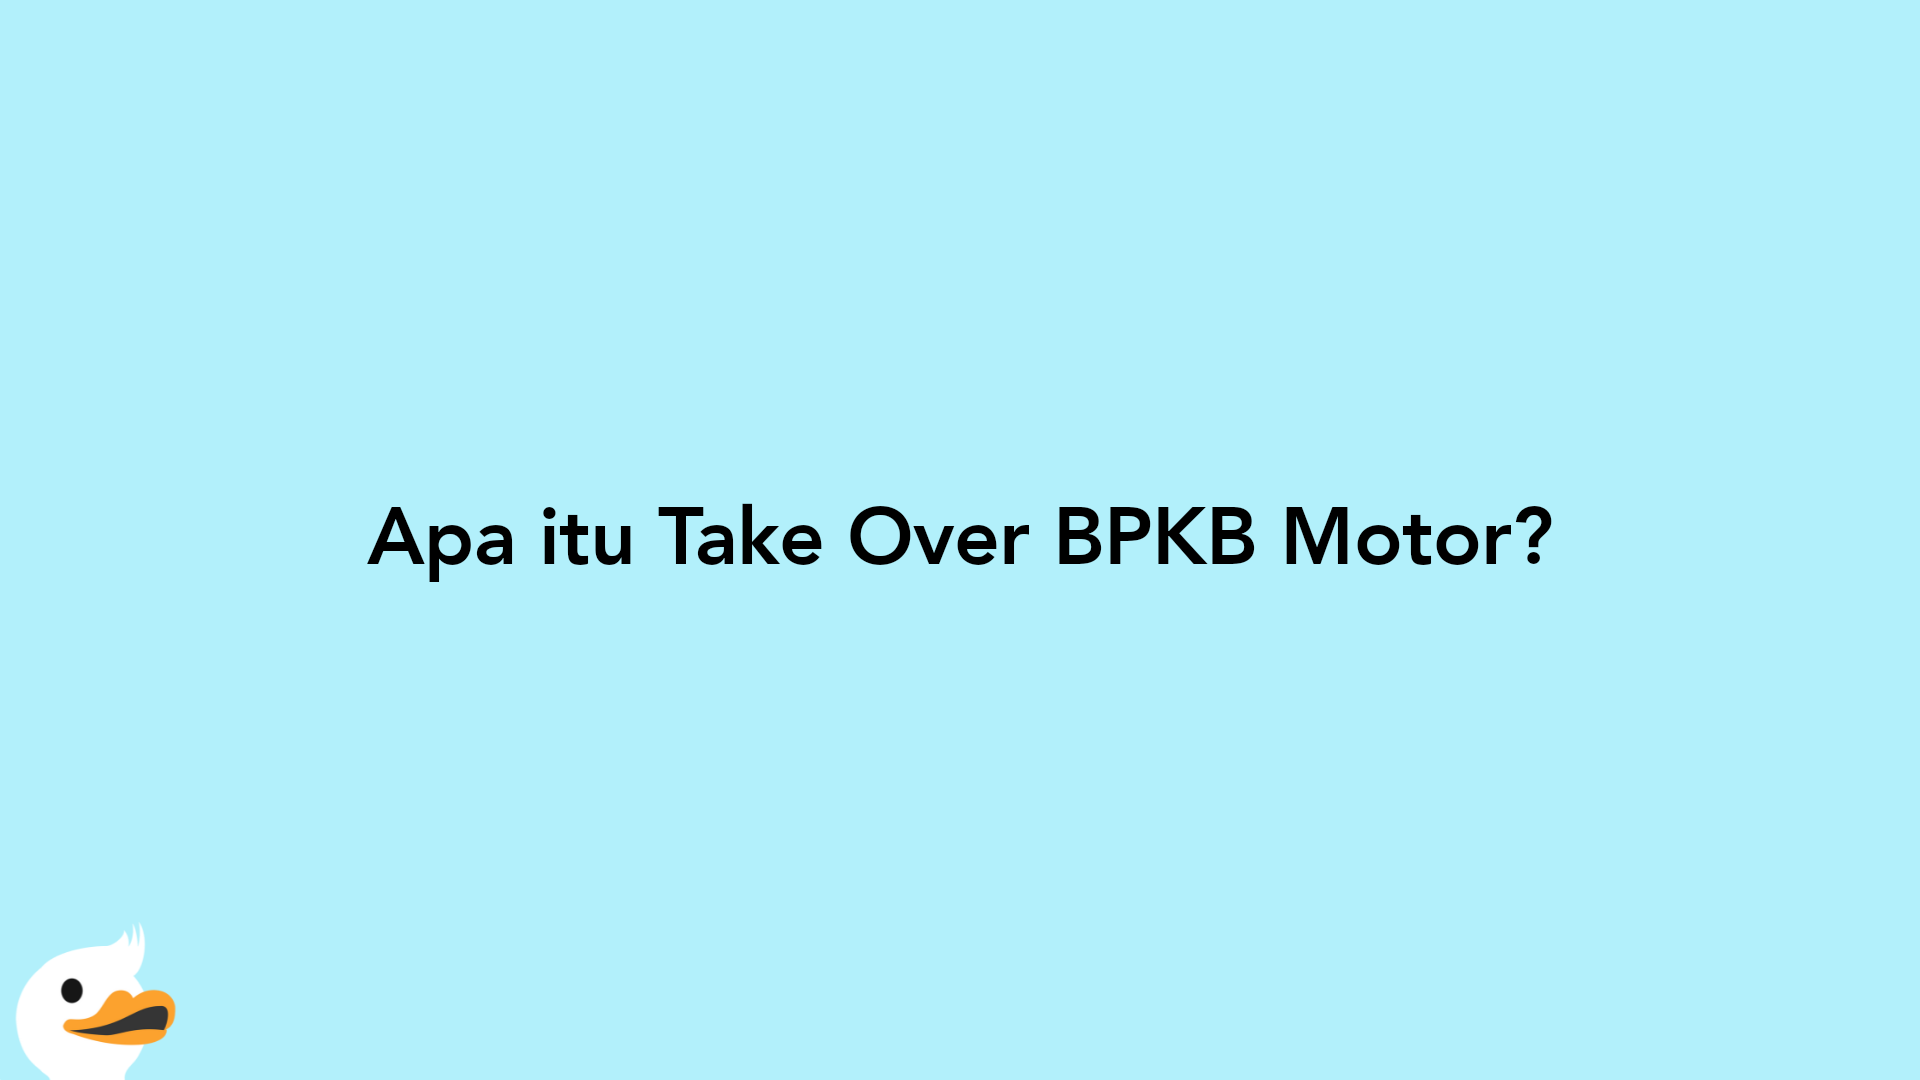 Apa itu Take Over BPKB Motor?